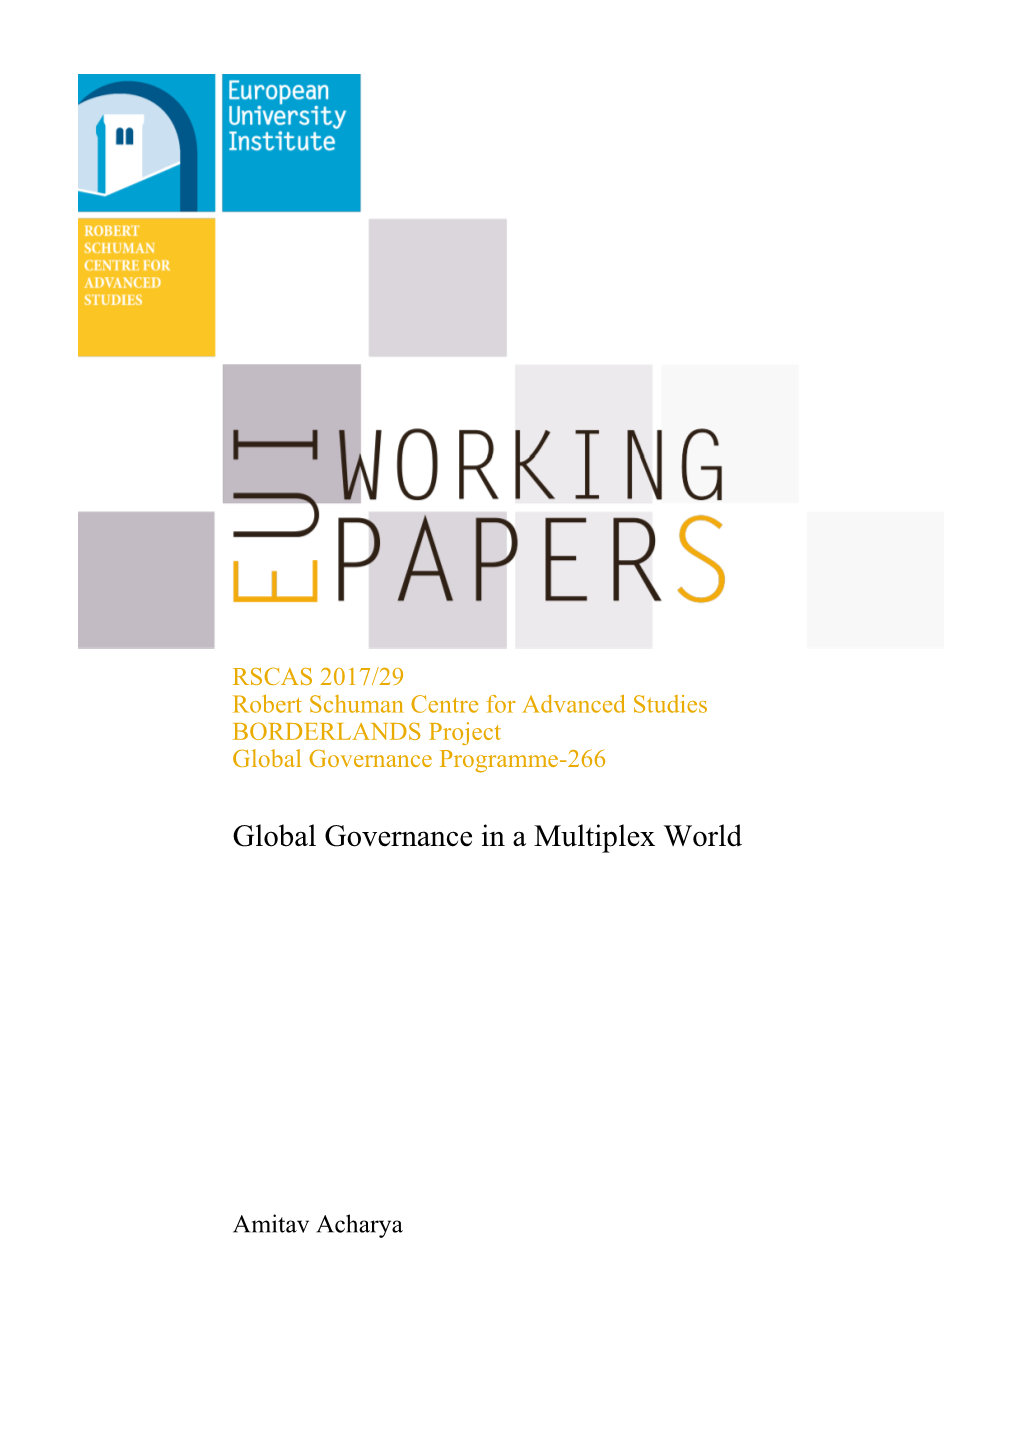 RSCAS 2017/29 Global Governance in a Multiplex World